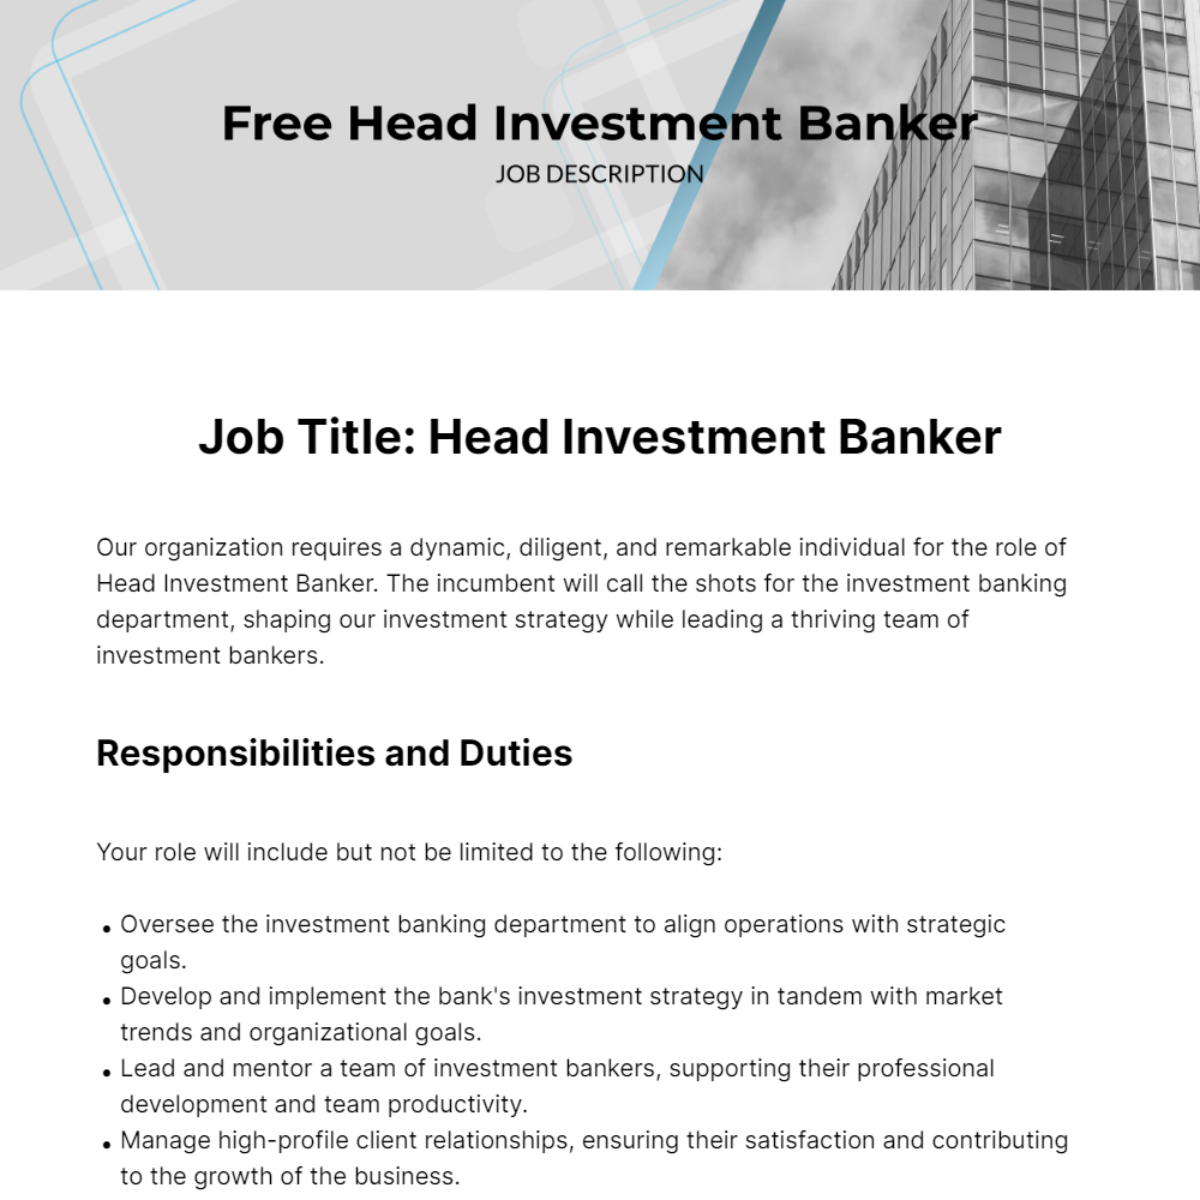 Free Head Investment Banker Job Description Template